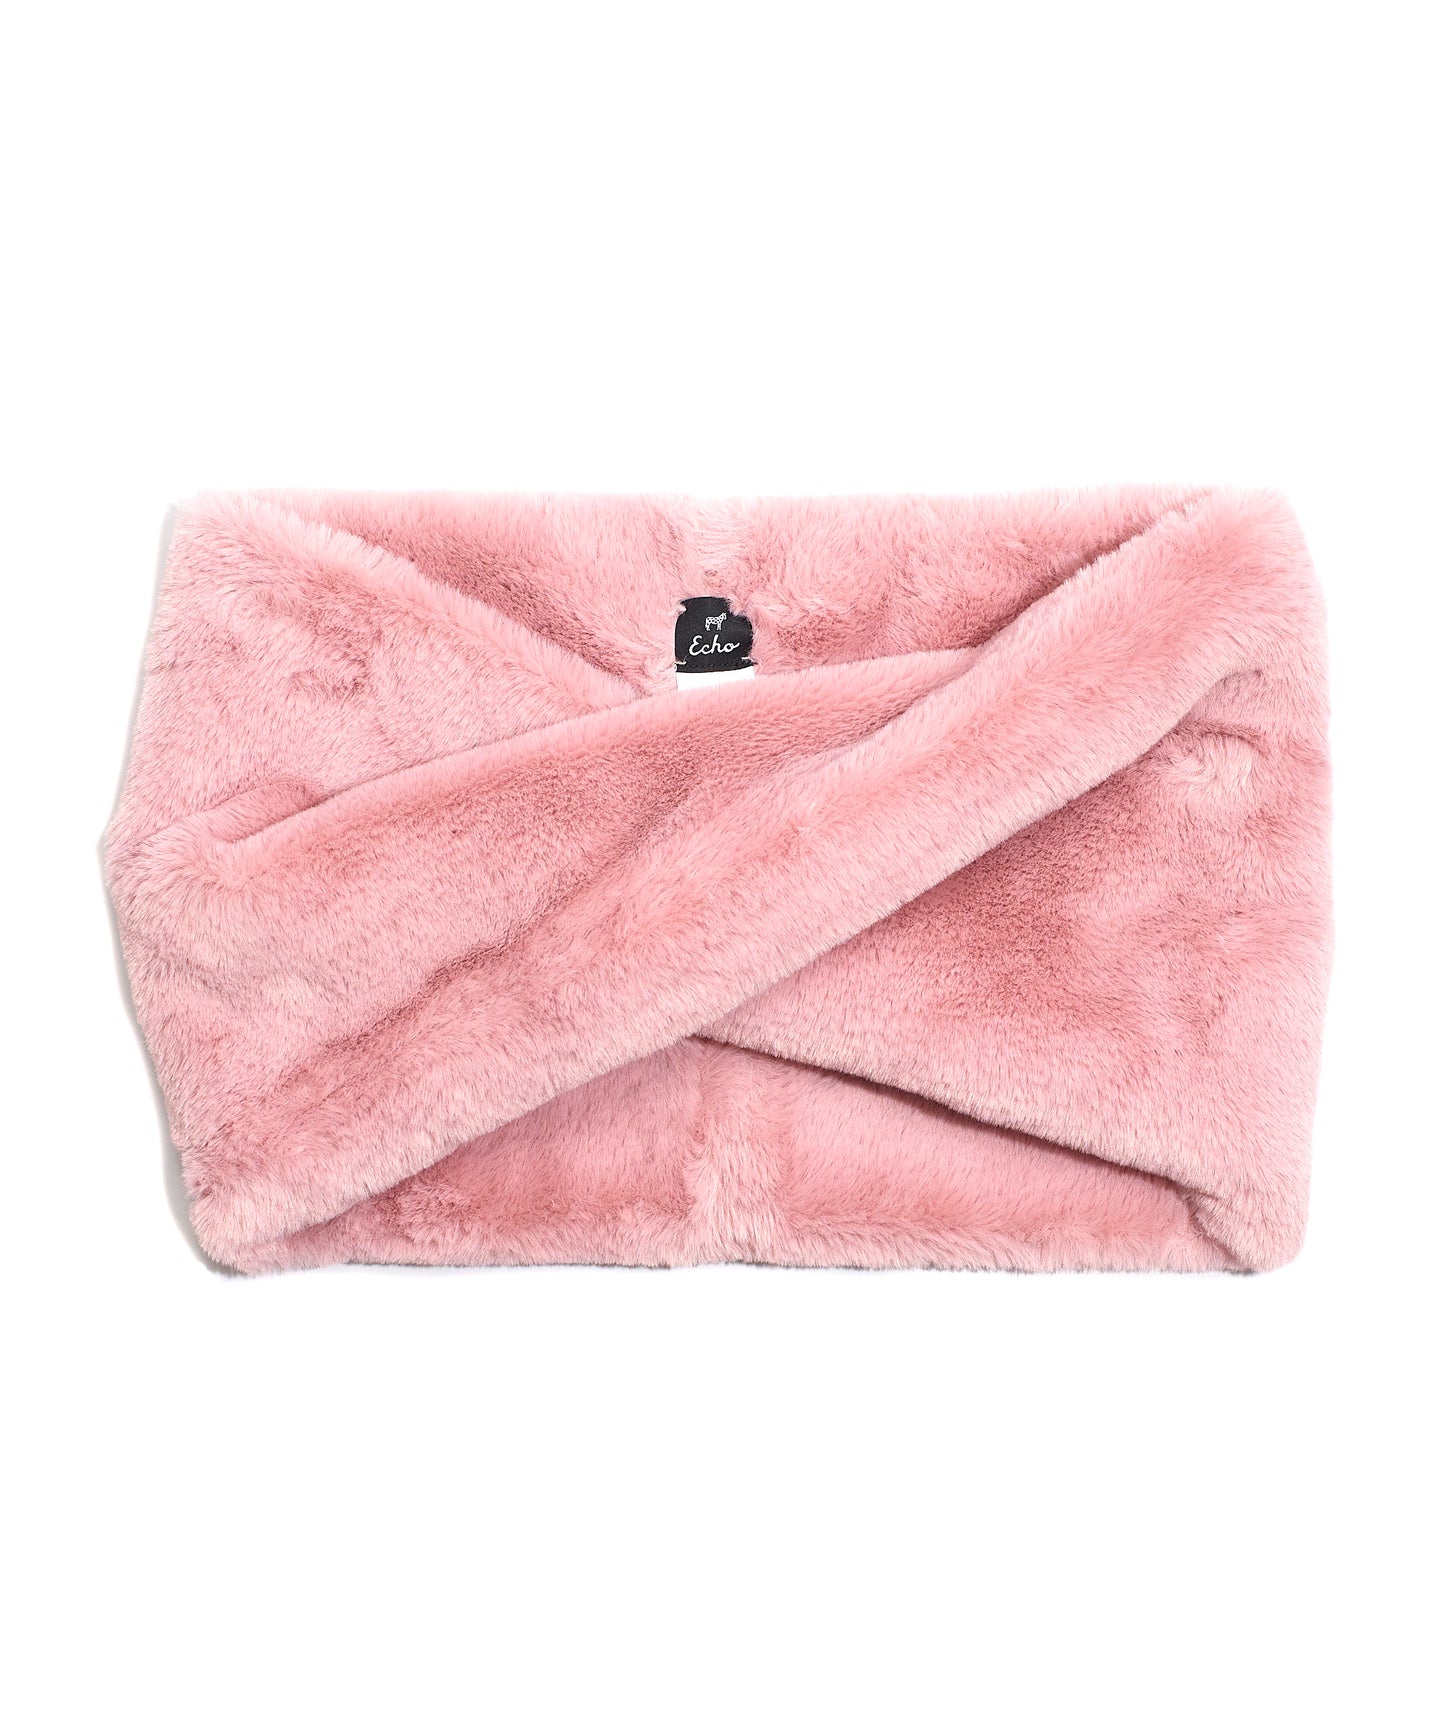 Faux Fur Twist Loop in color Cozy Pink